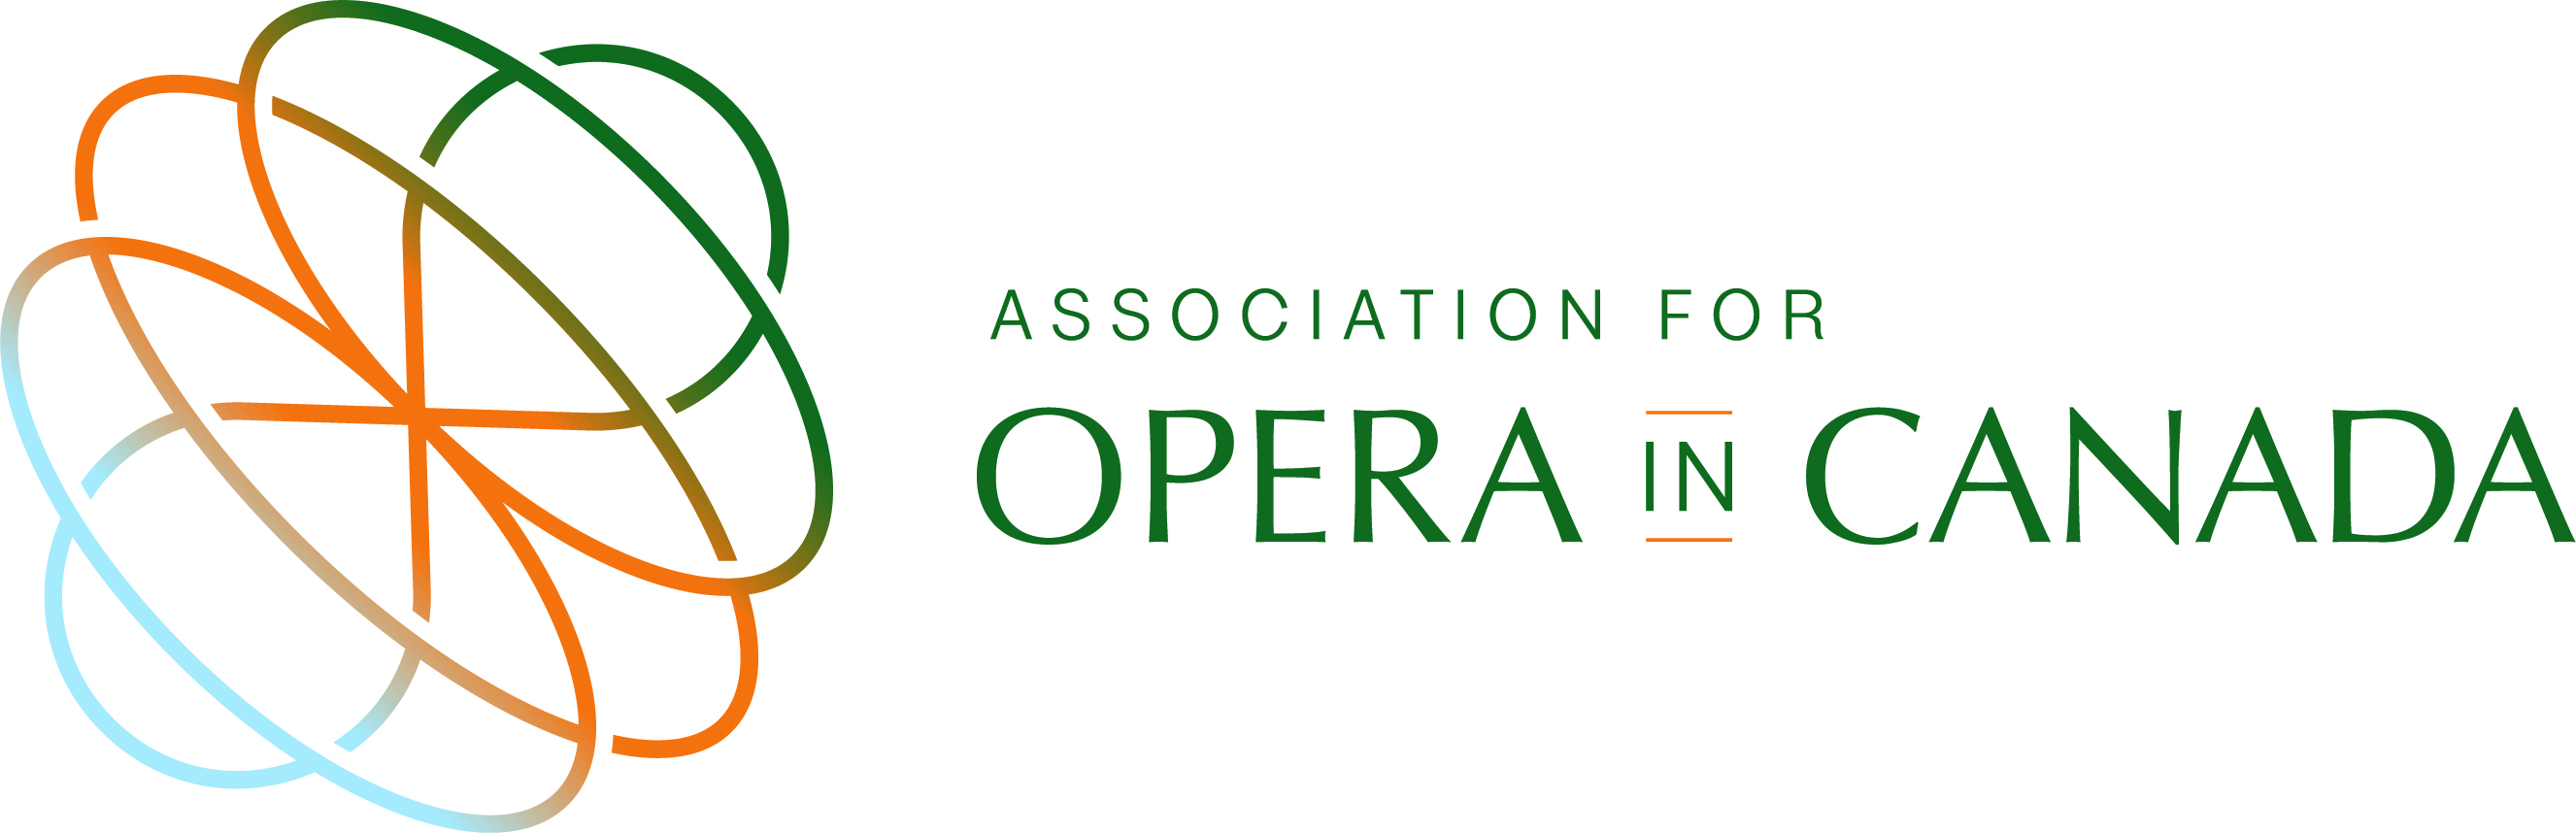 Association for Opera in Canada logo